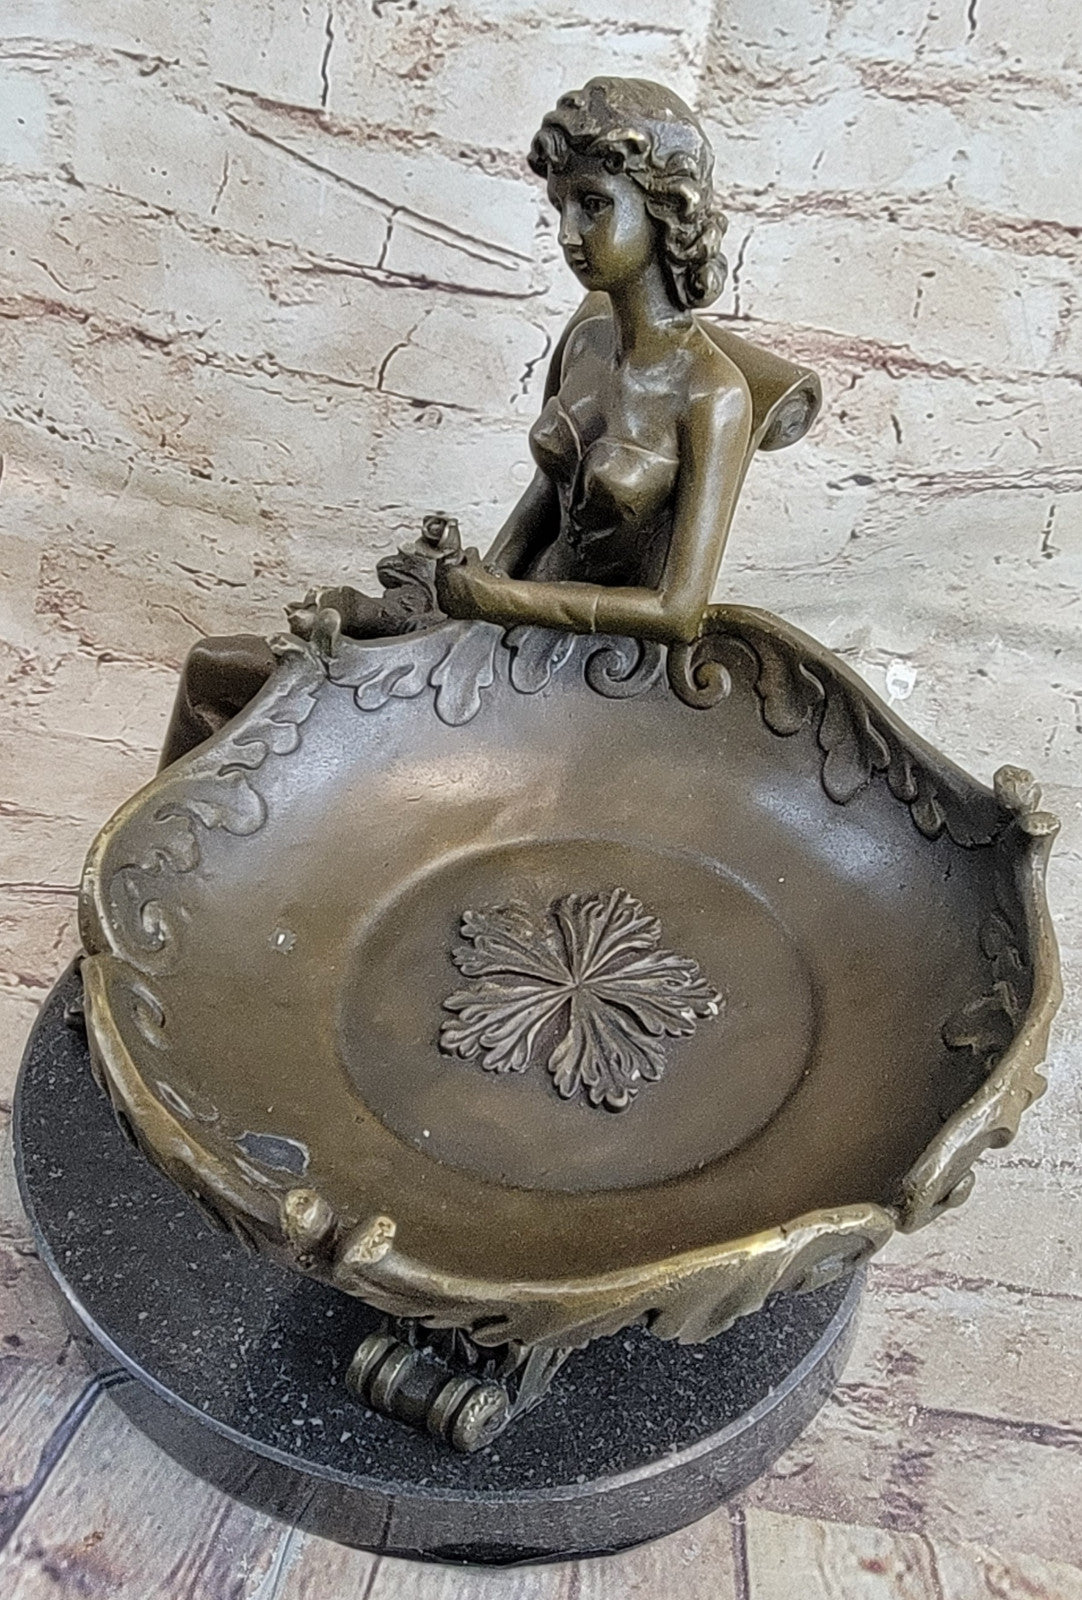 Handmade Large Lady Multi Purpose Bronze Sculpture Perfect Valentine Gift